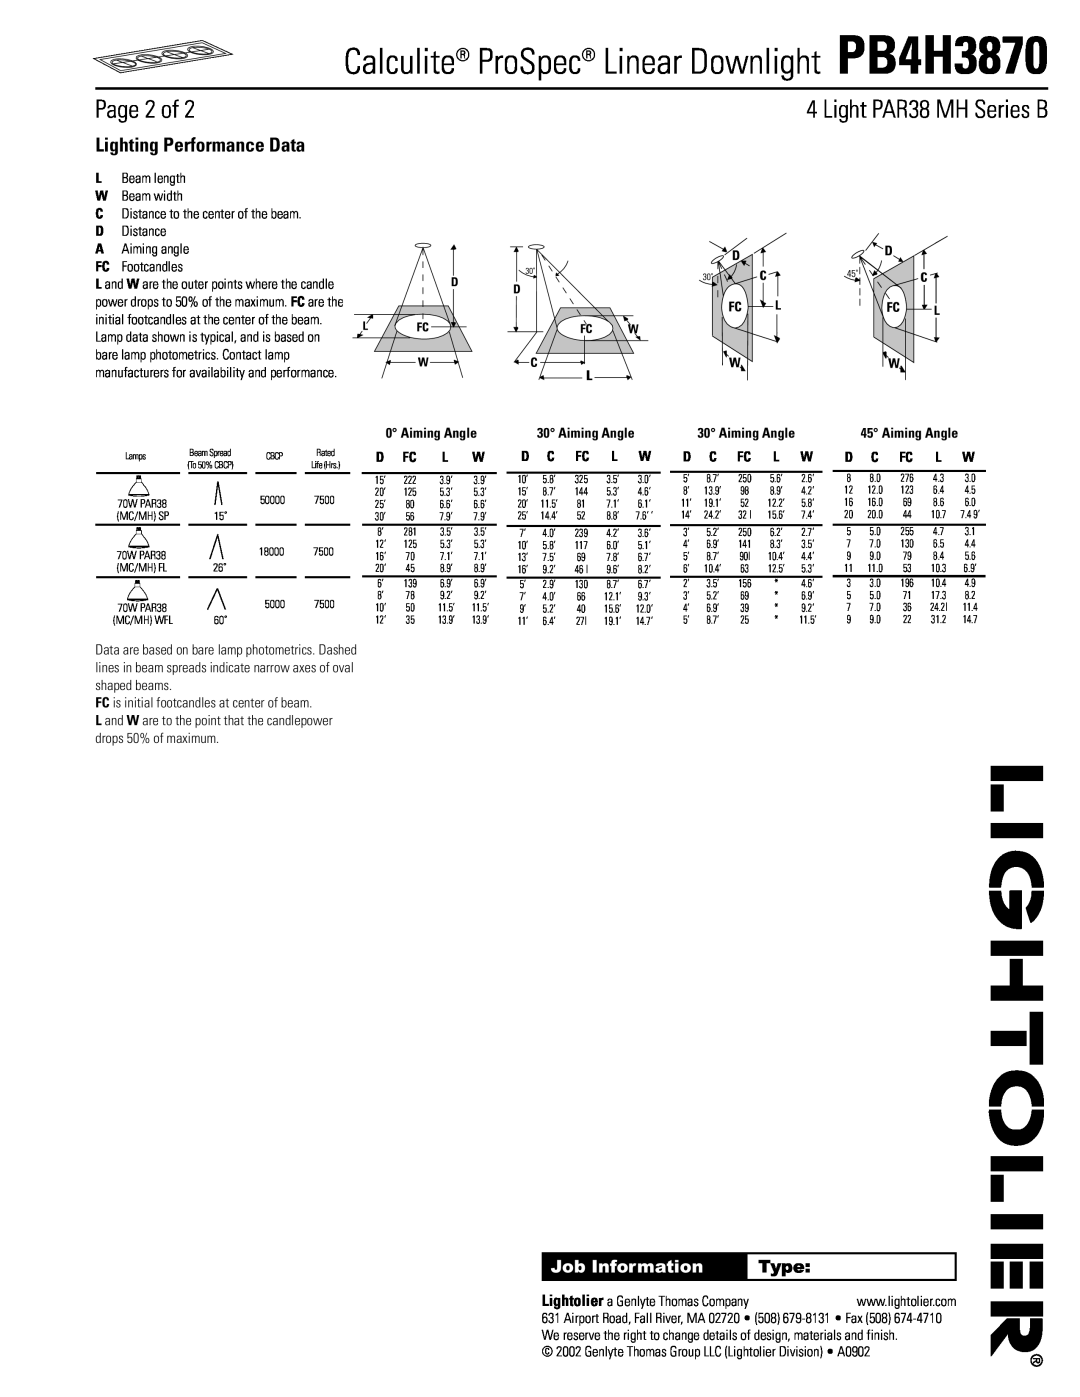 Lightolier Page 2 of, Lighting Performance Data, Calculite ProSpec Linear Downlight PB4H3870, Light PAR38 MH Series B 